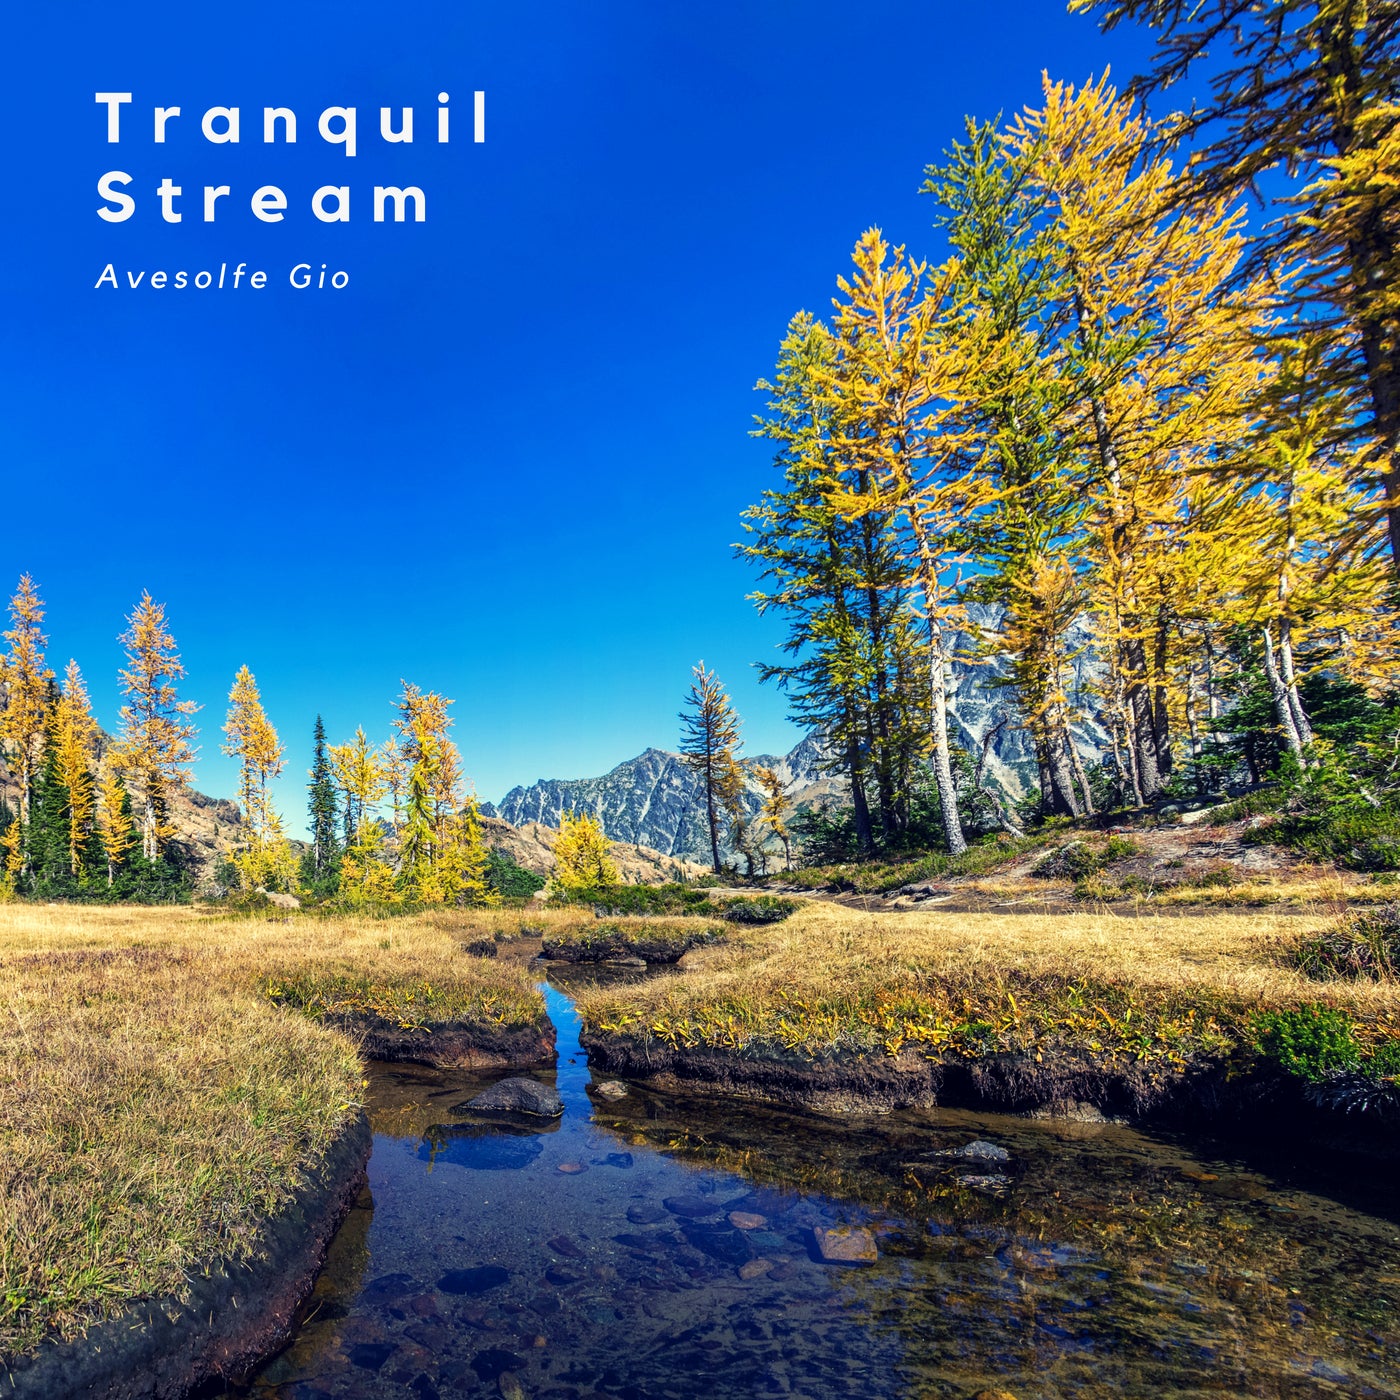 Tranquil Stream